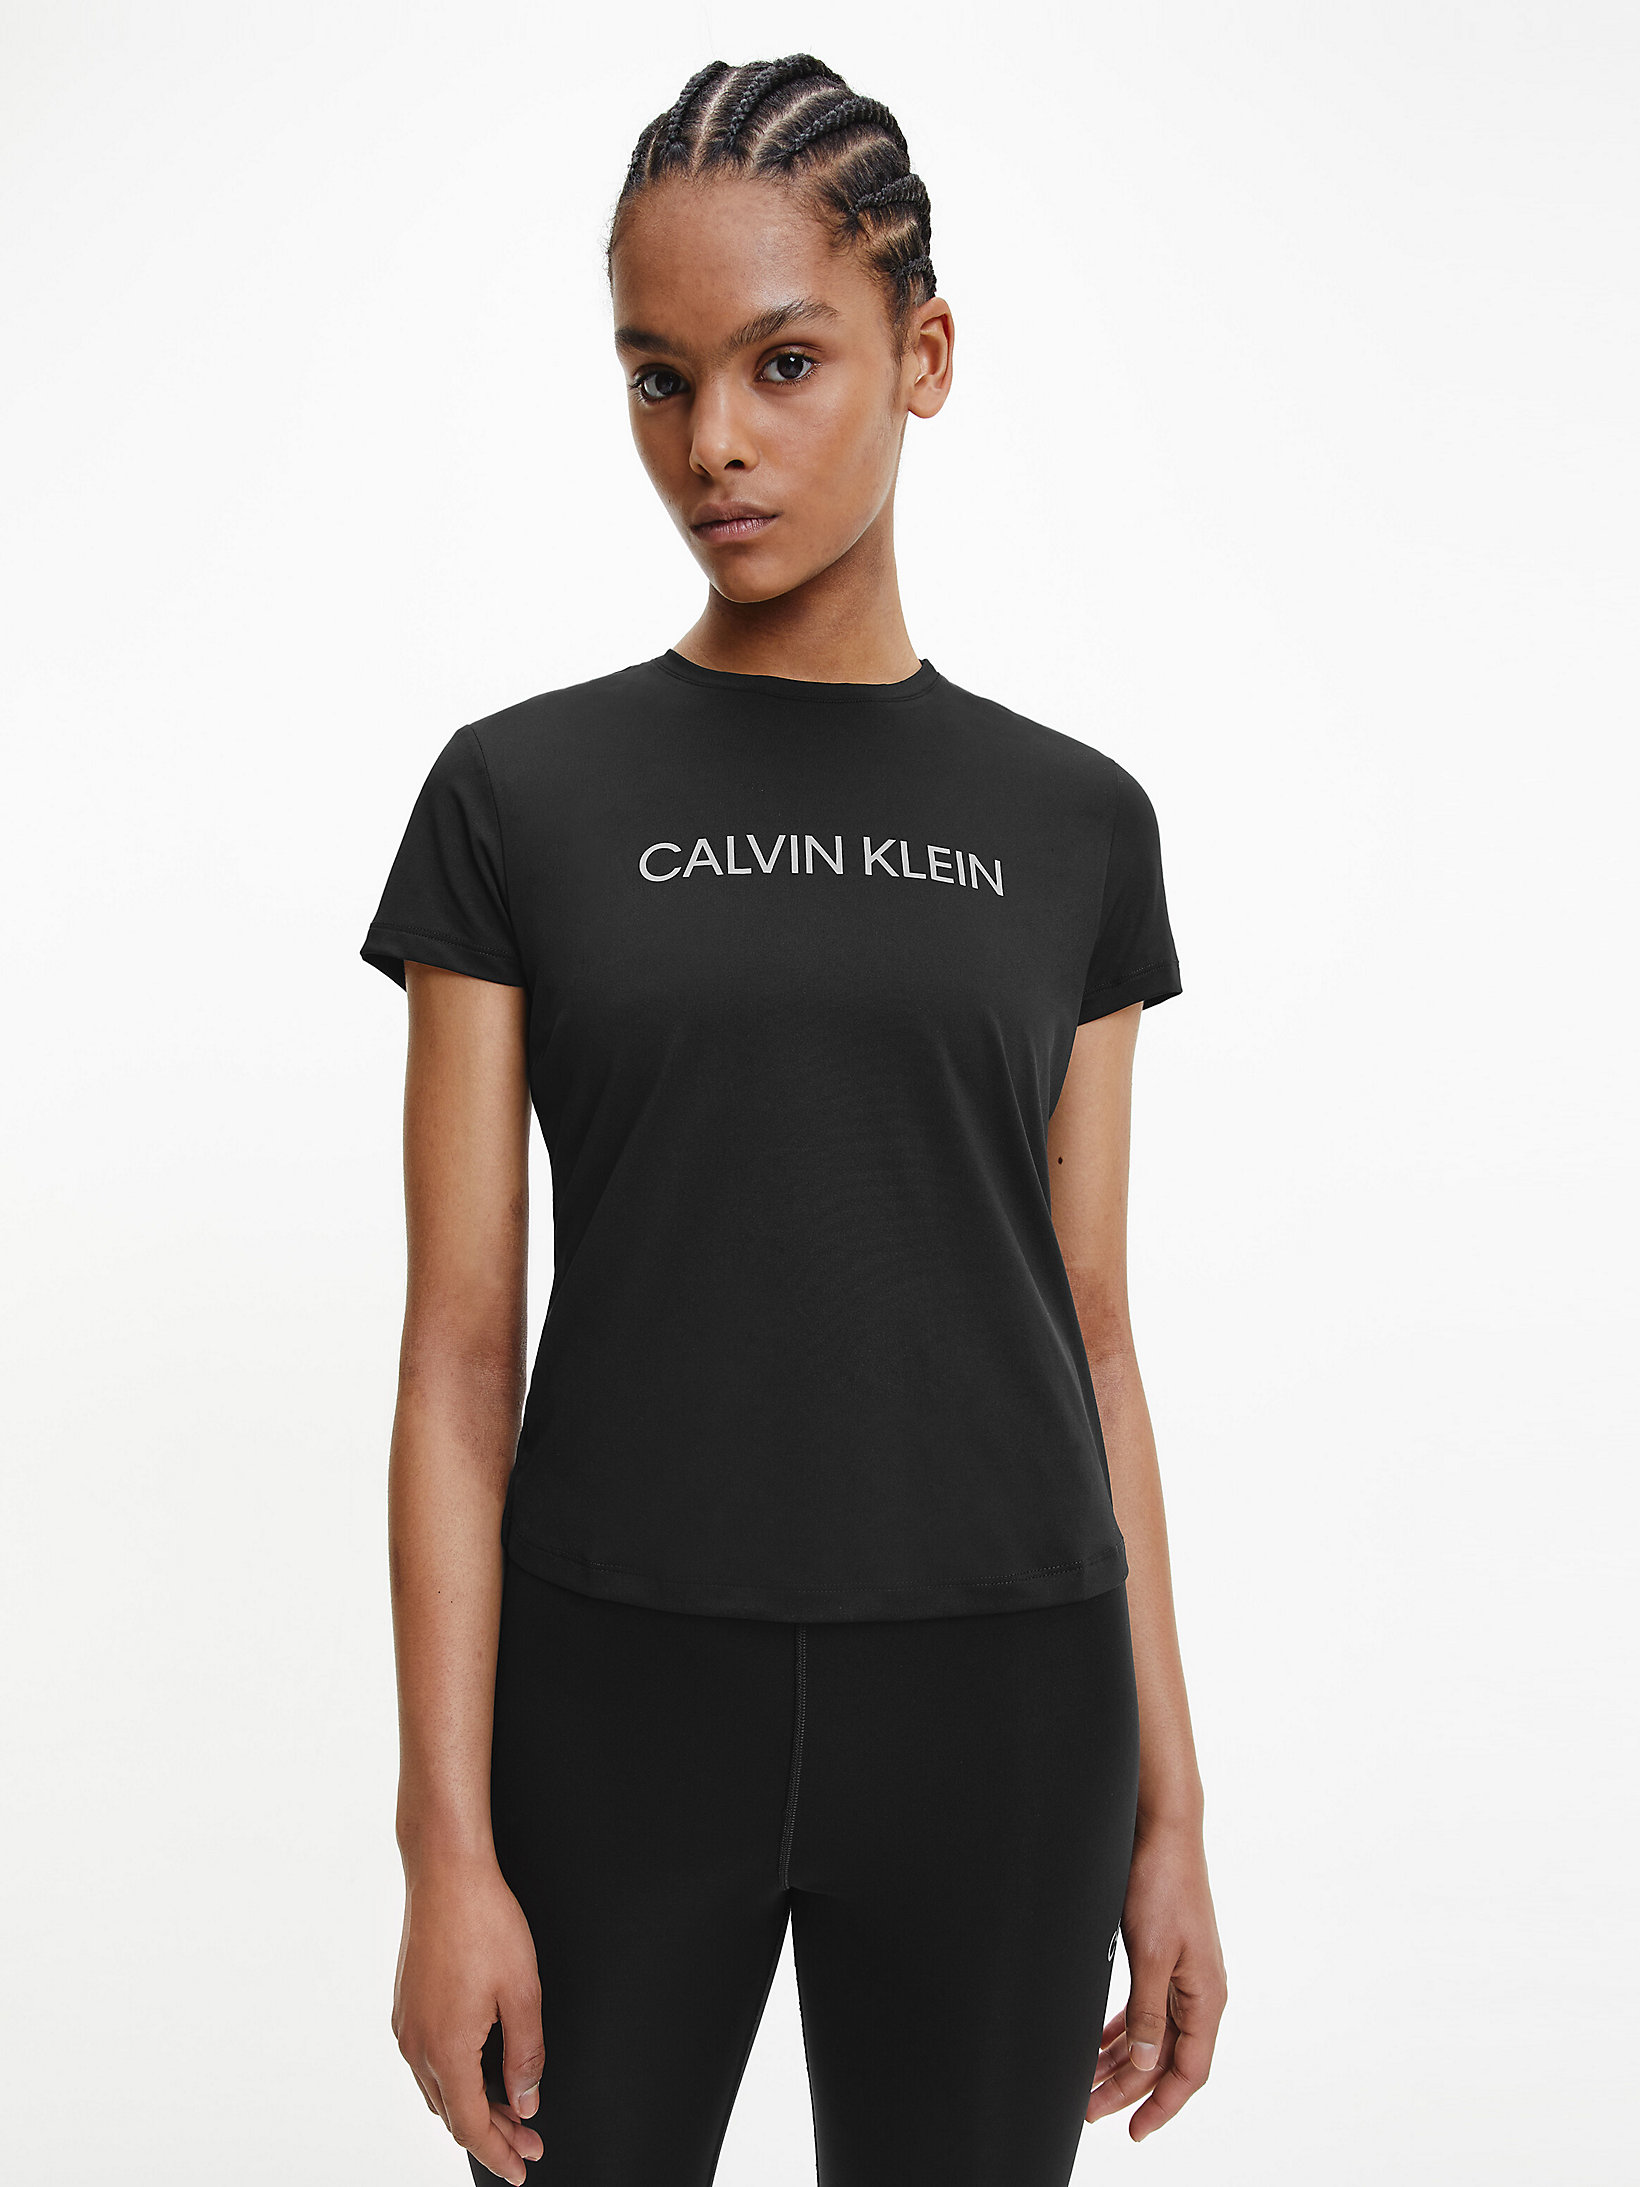 CK Black/reflective Silver > Облегающая спортивная футболка с логотипом > undefined Женщины - Calvin Klein